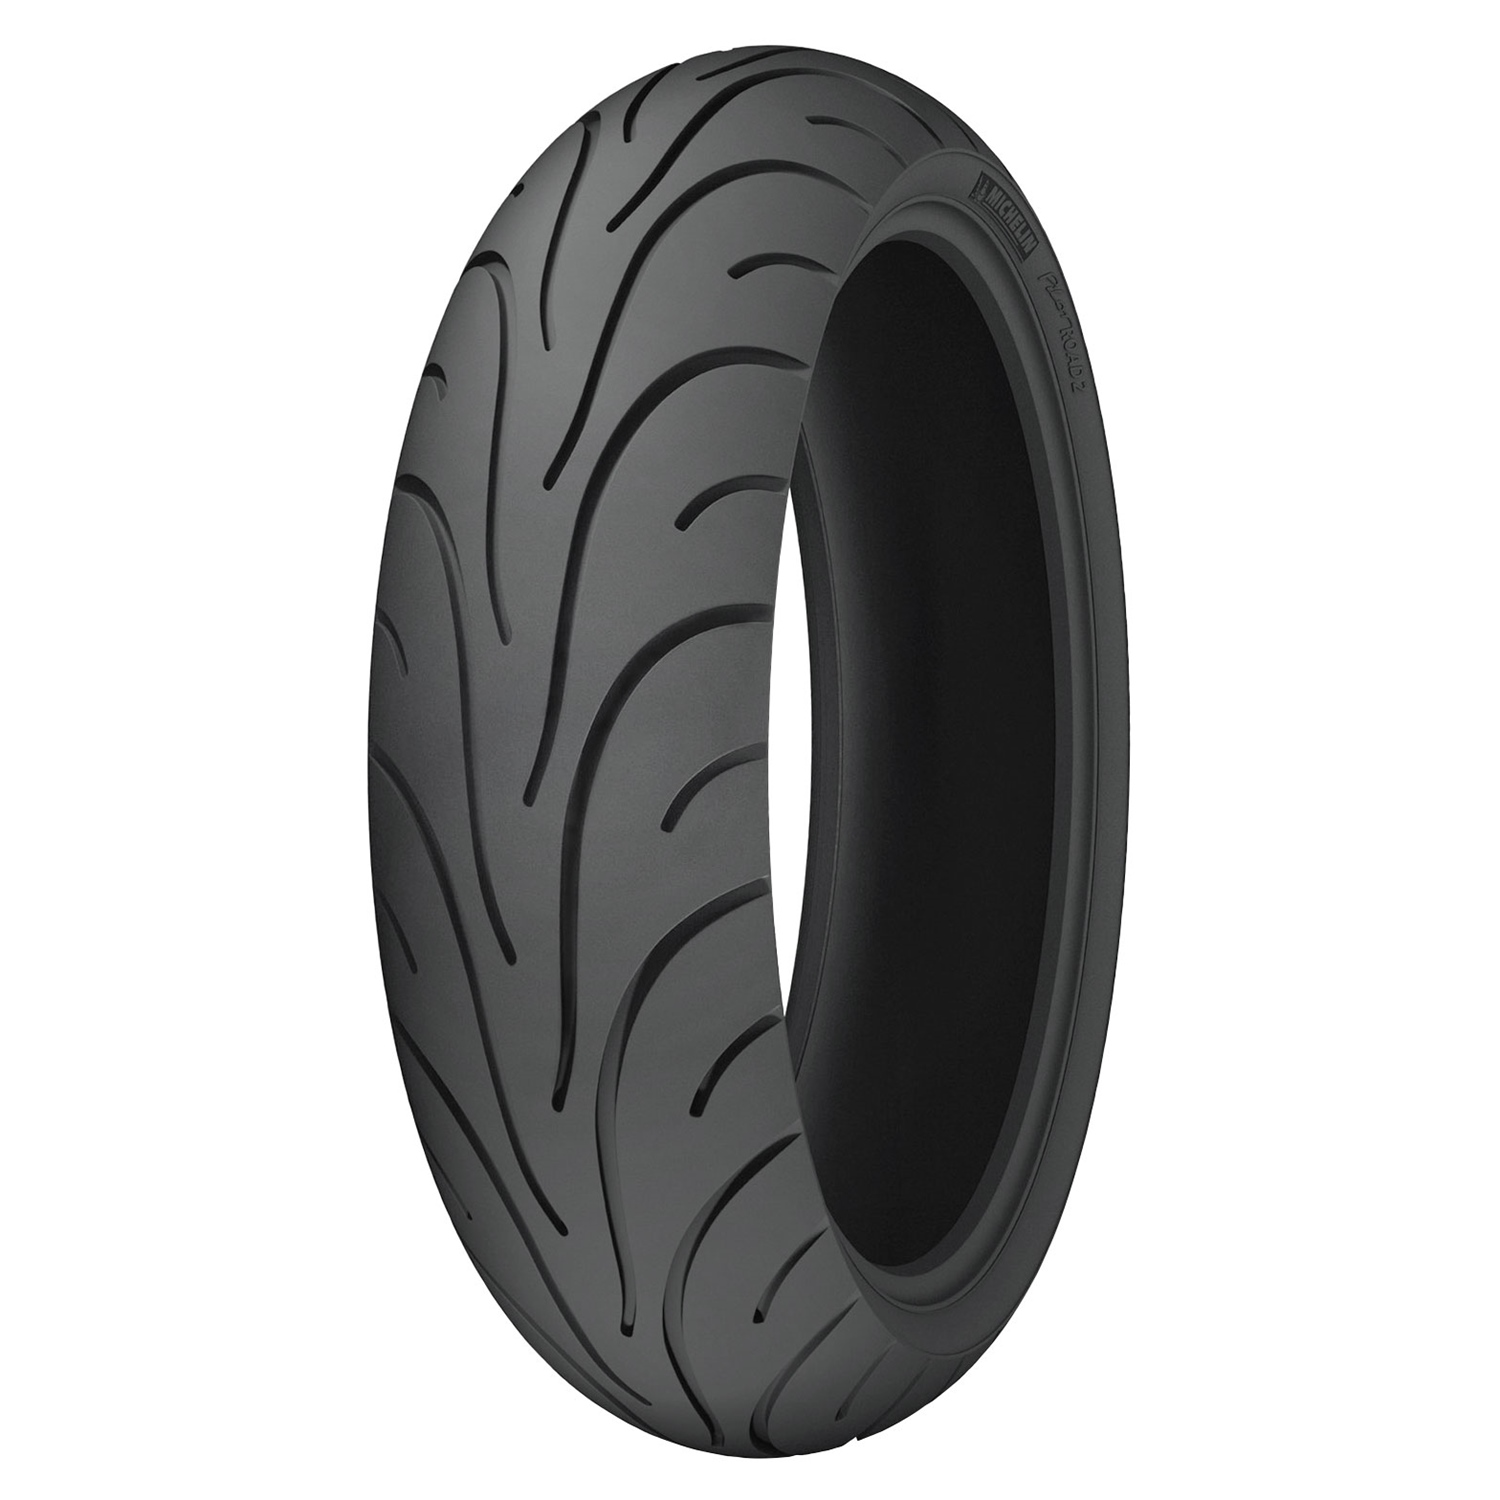 Michelin Tire Load Chart